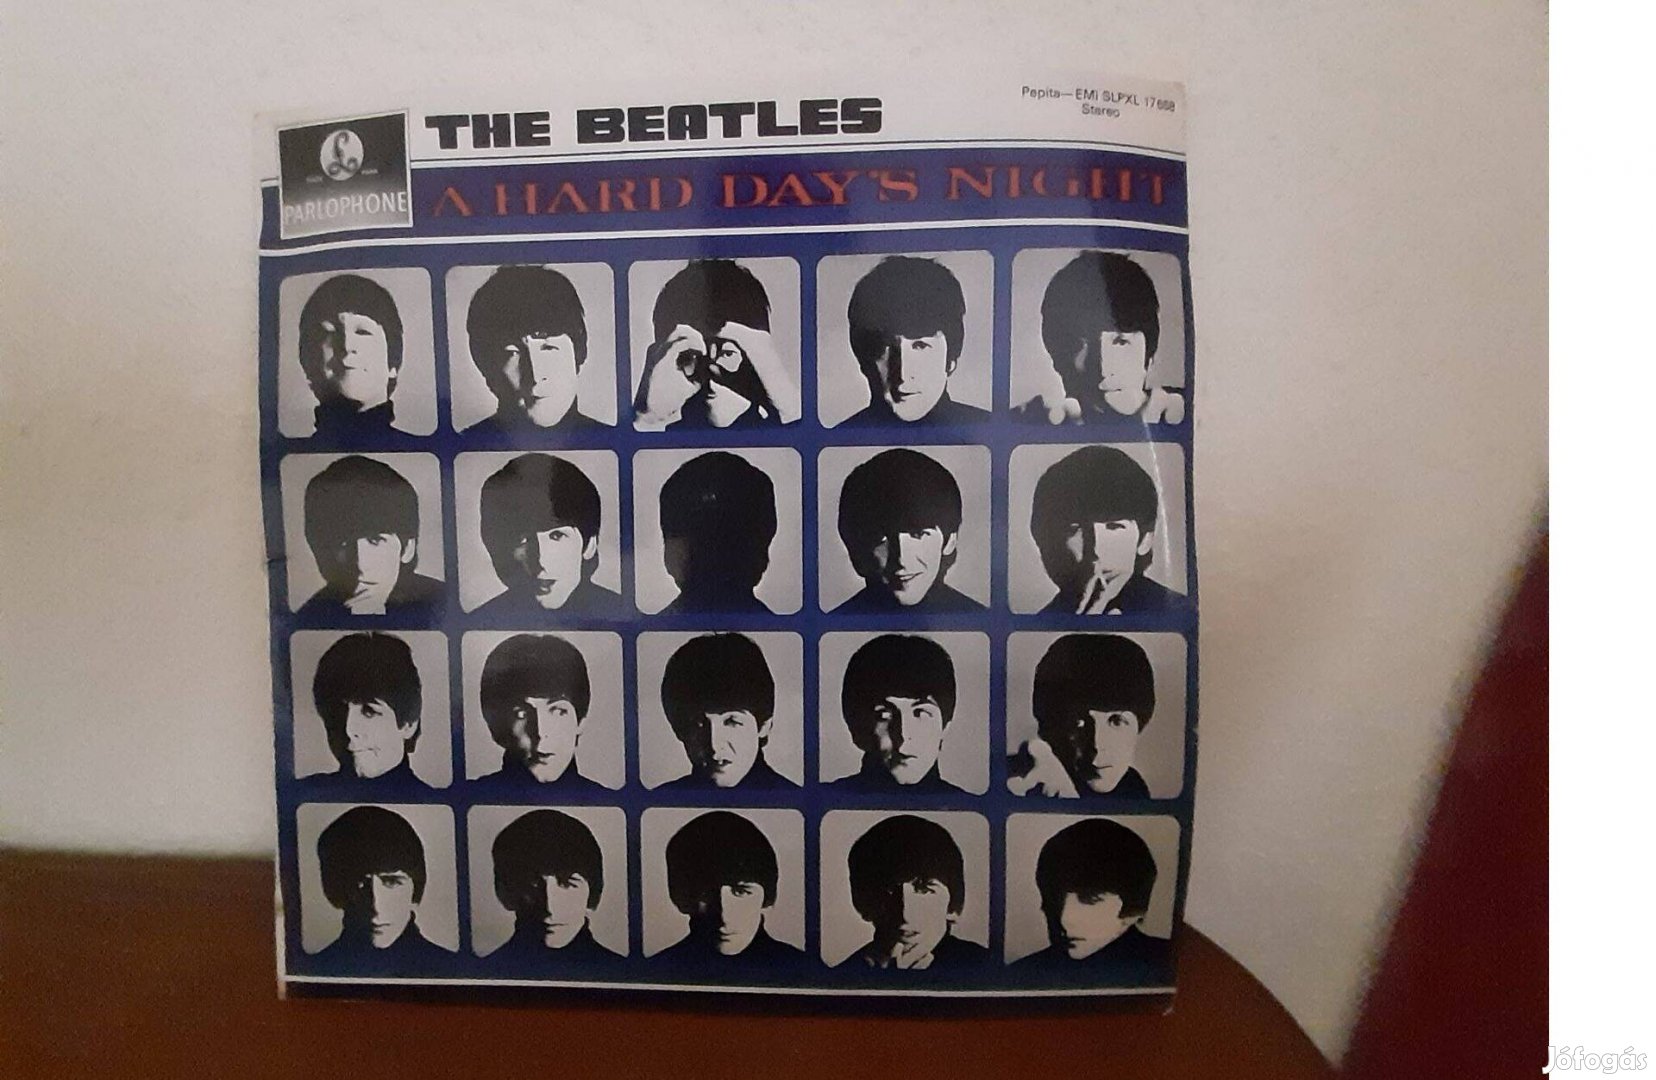 The Beatles - A Hard Day's Night bakelit